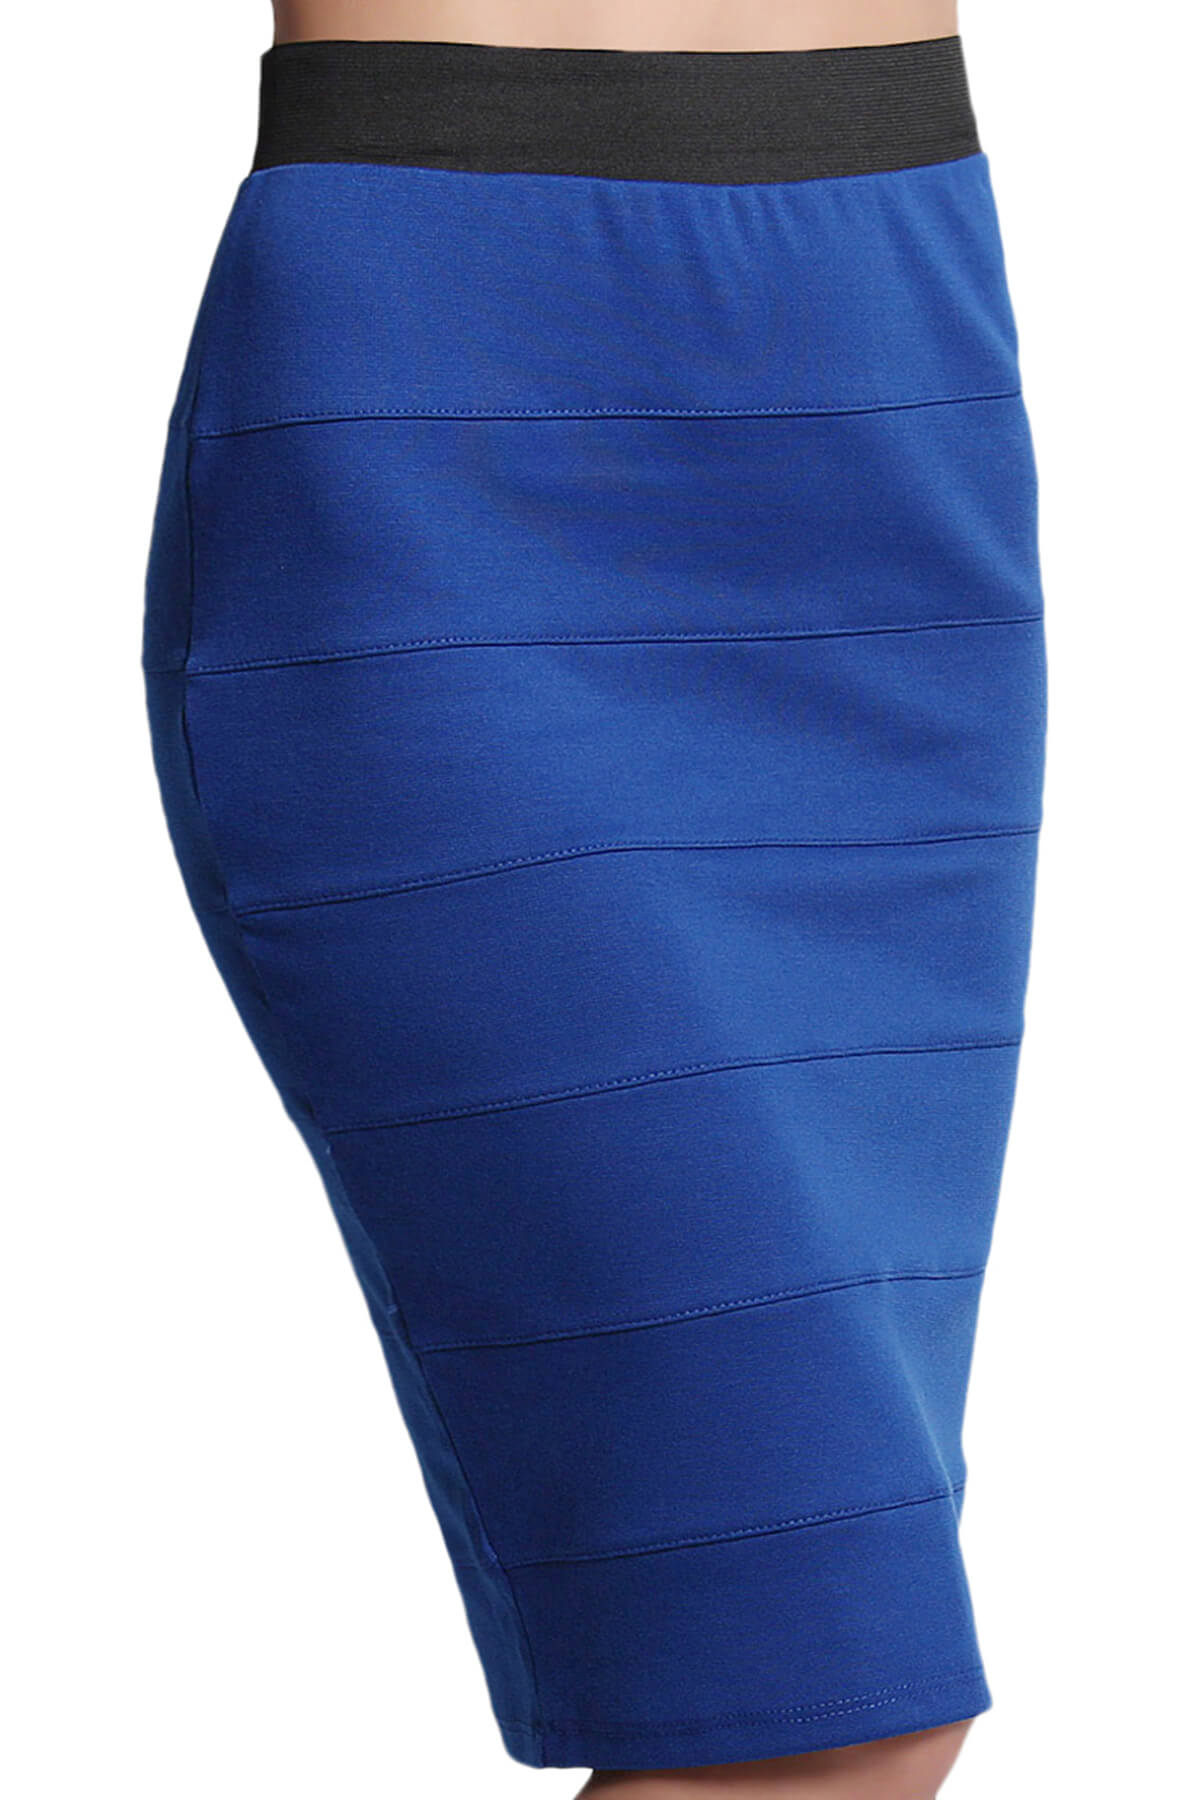 TheMogan Women's Bandage Stretch Ponte Knit Knee Length Elastic High Waist  Pencil Skirt